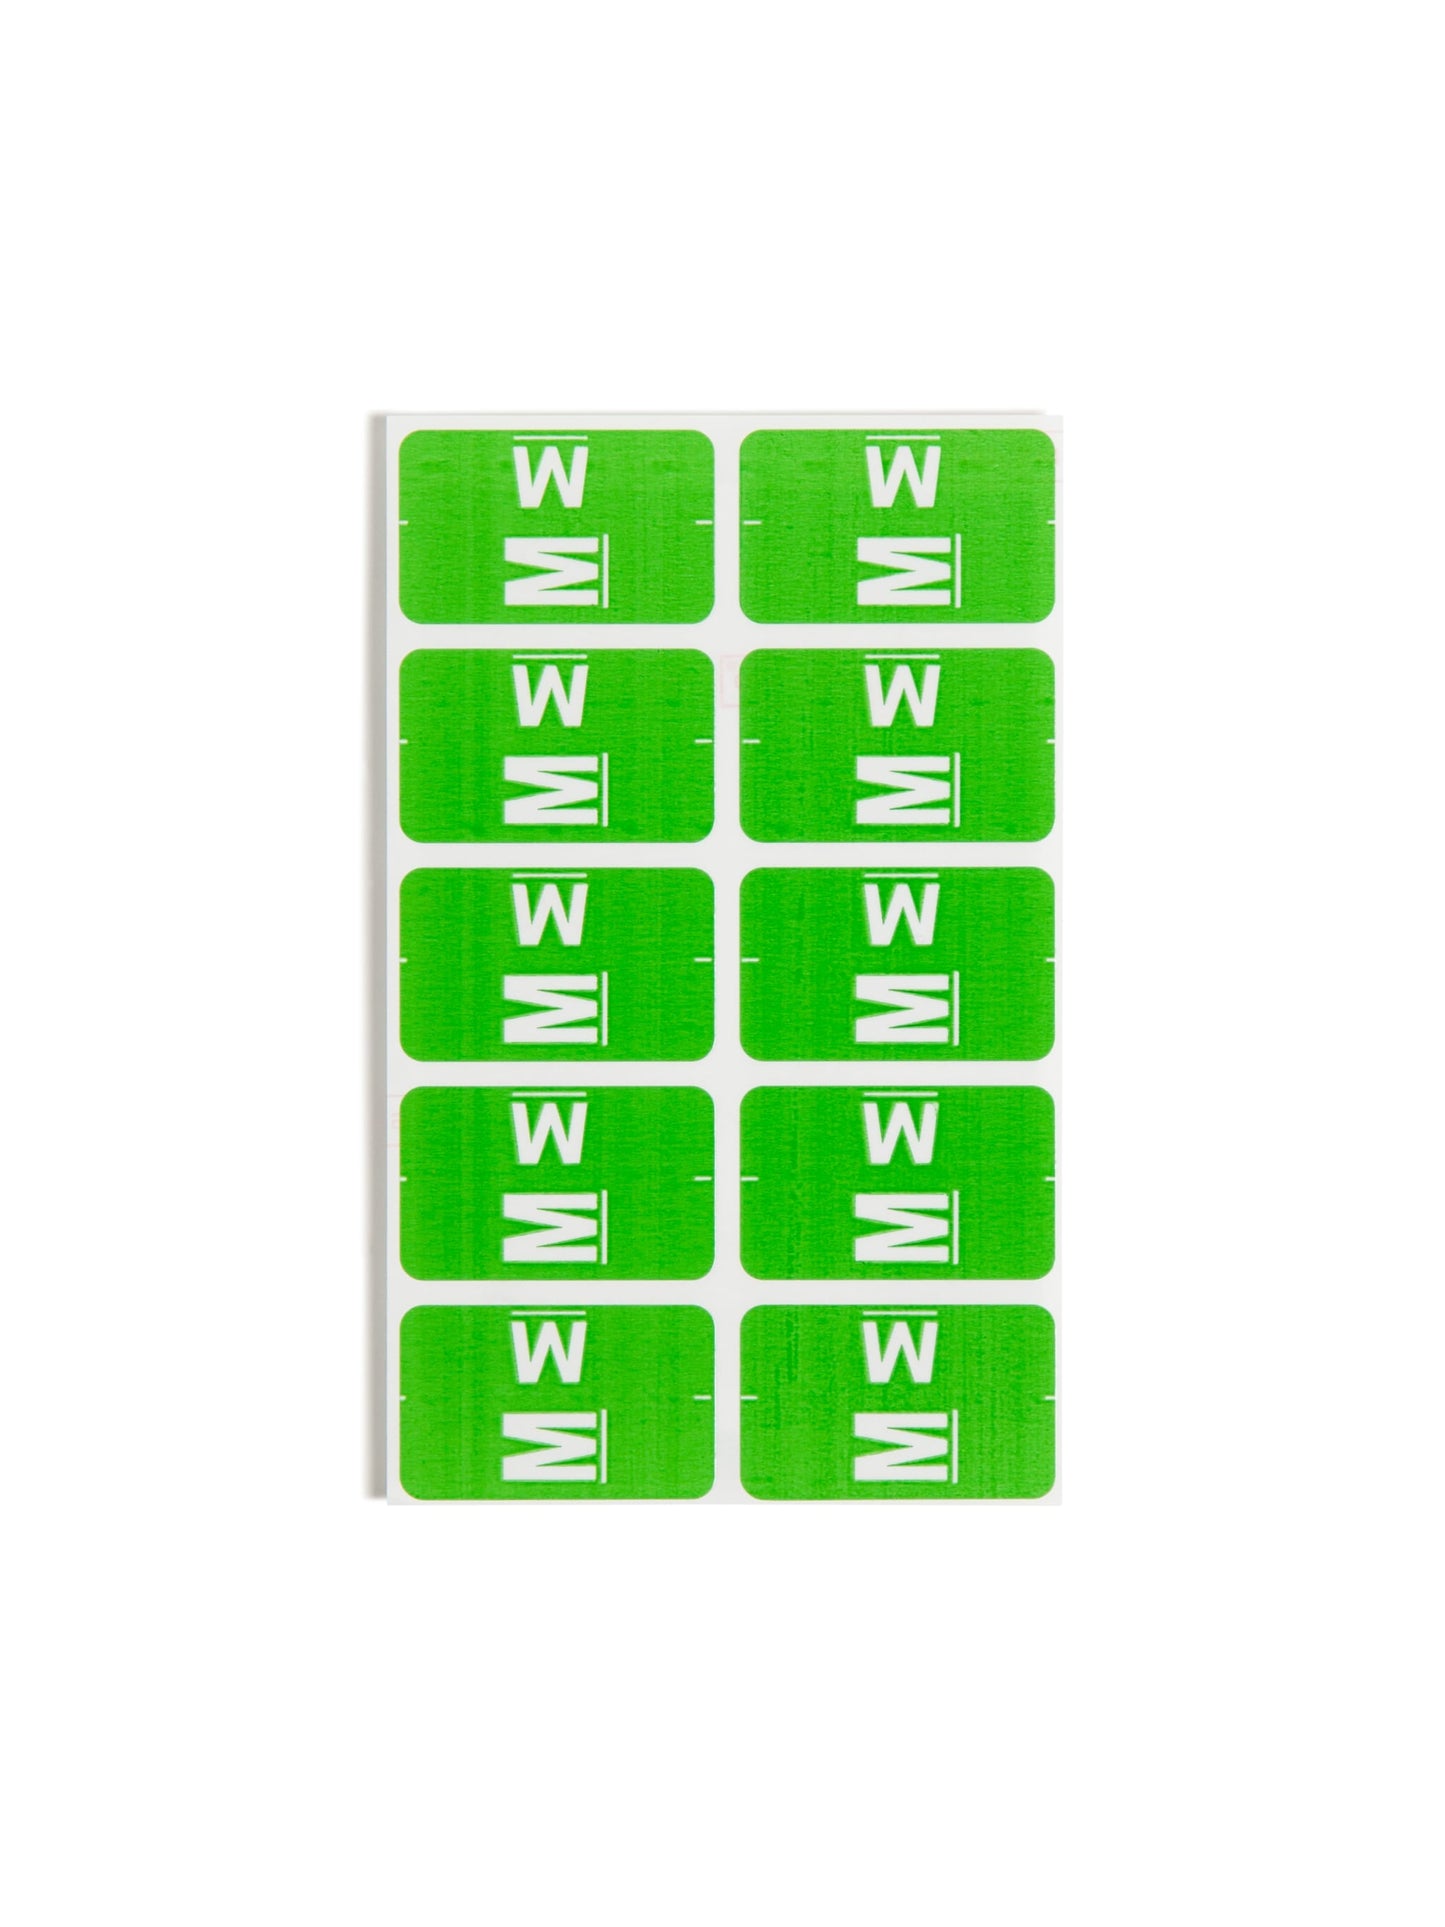 AlphaZ® ACCS Color Coded Alphabetic Labels - Sheets, Light Green Color, 1" X 1-5/8" Size, 